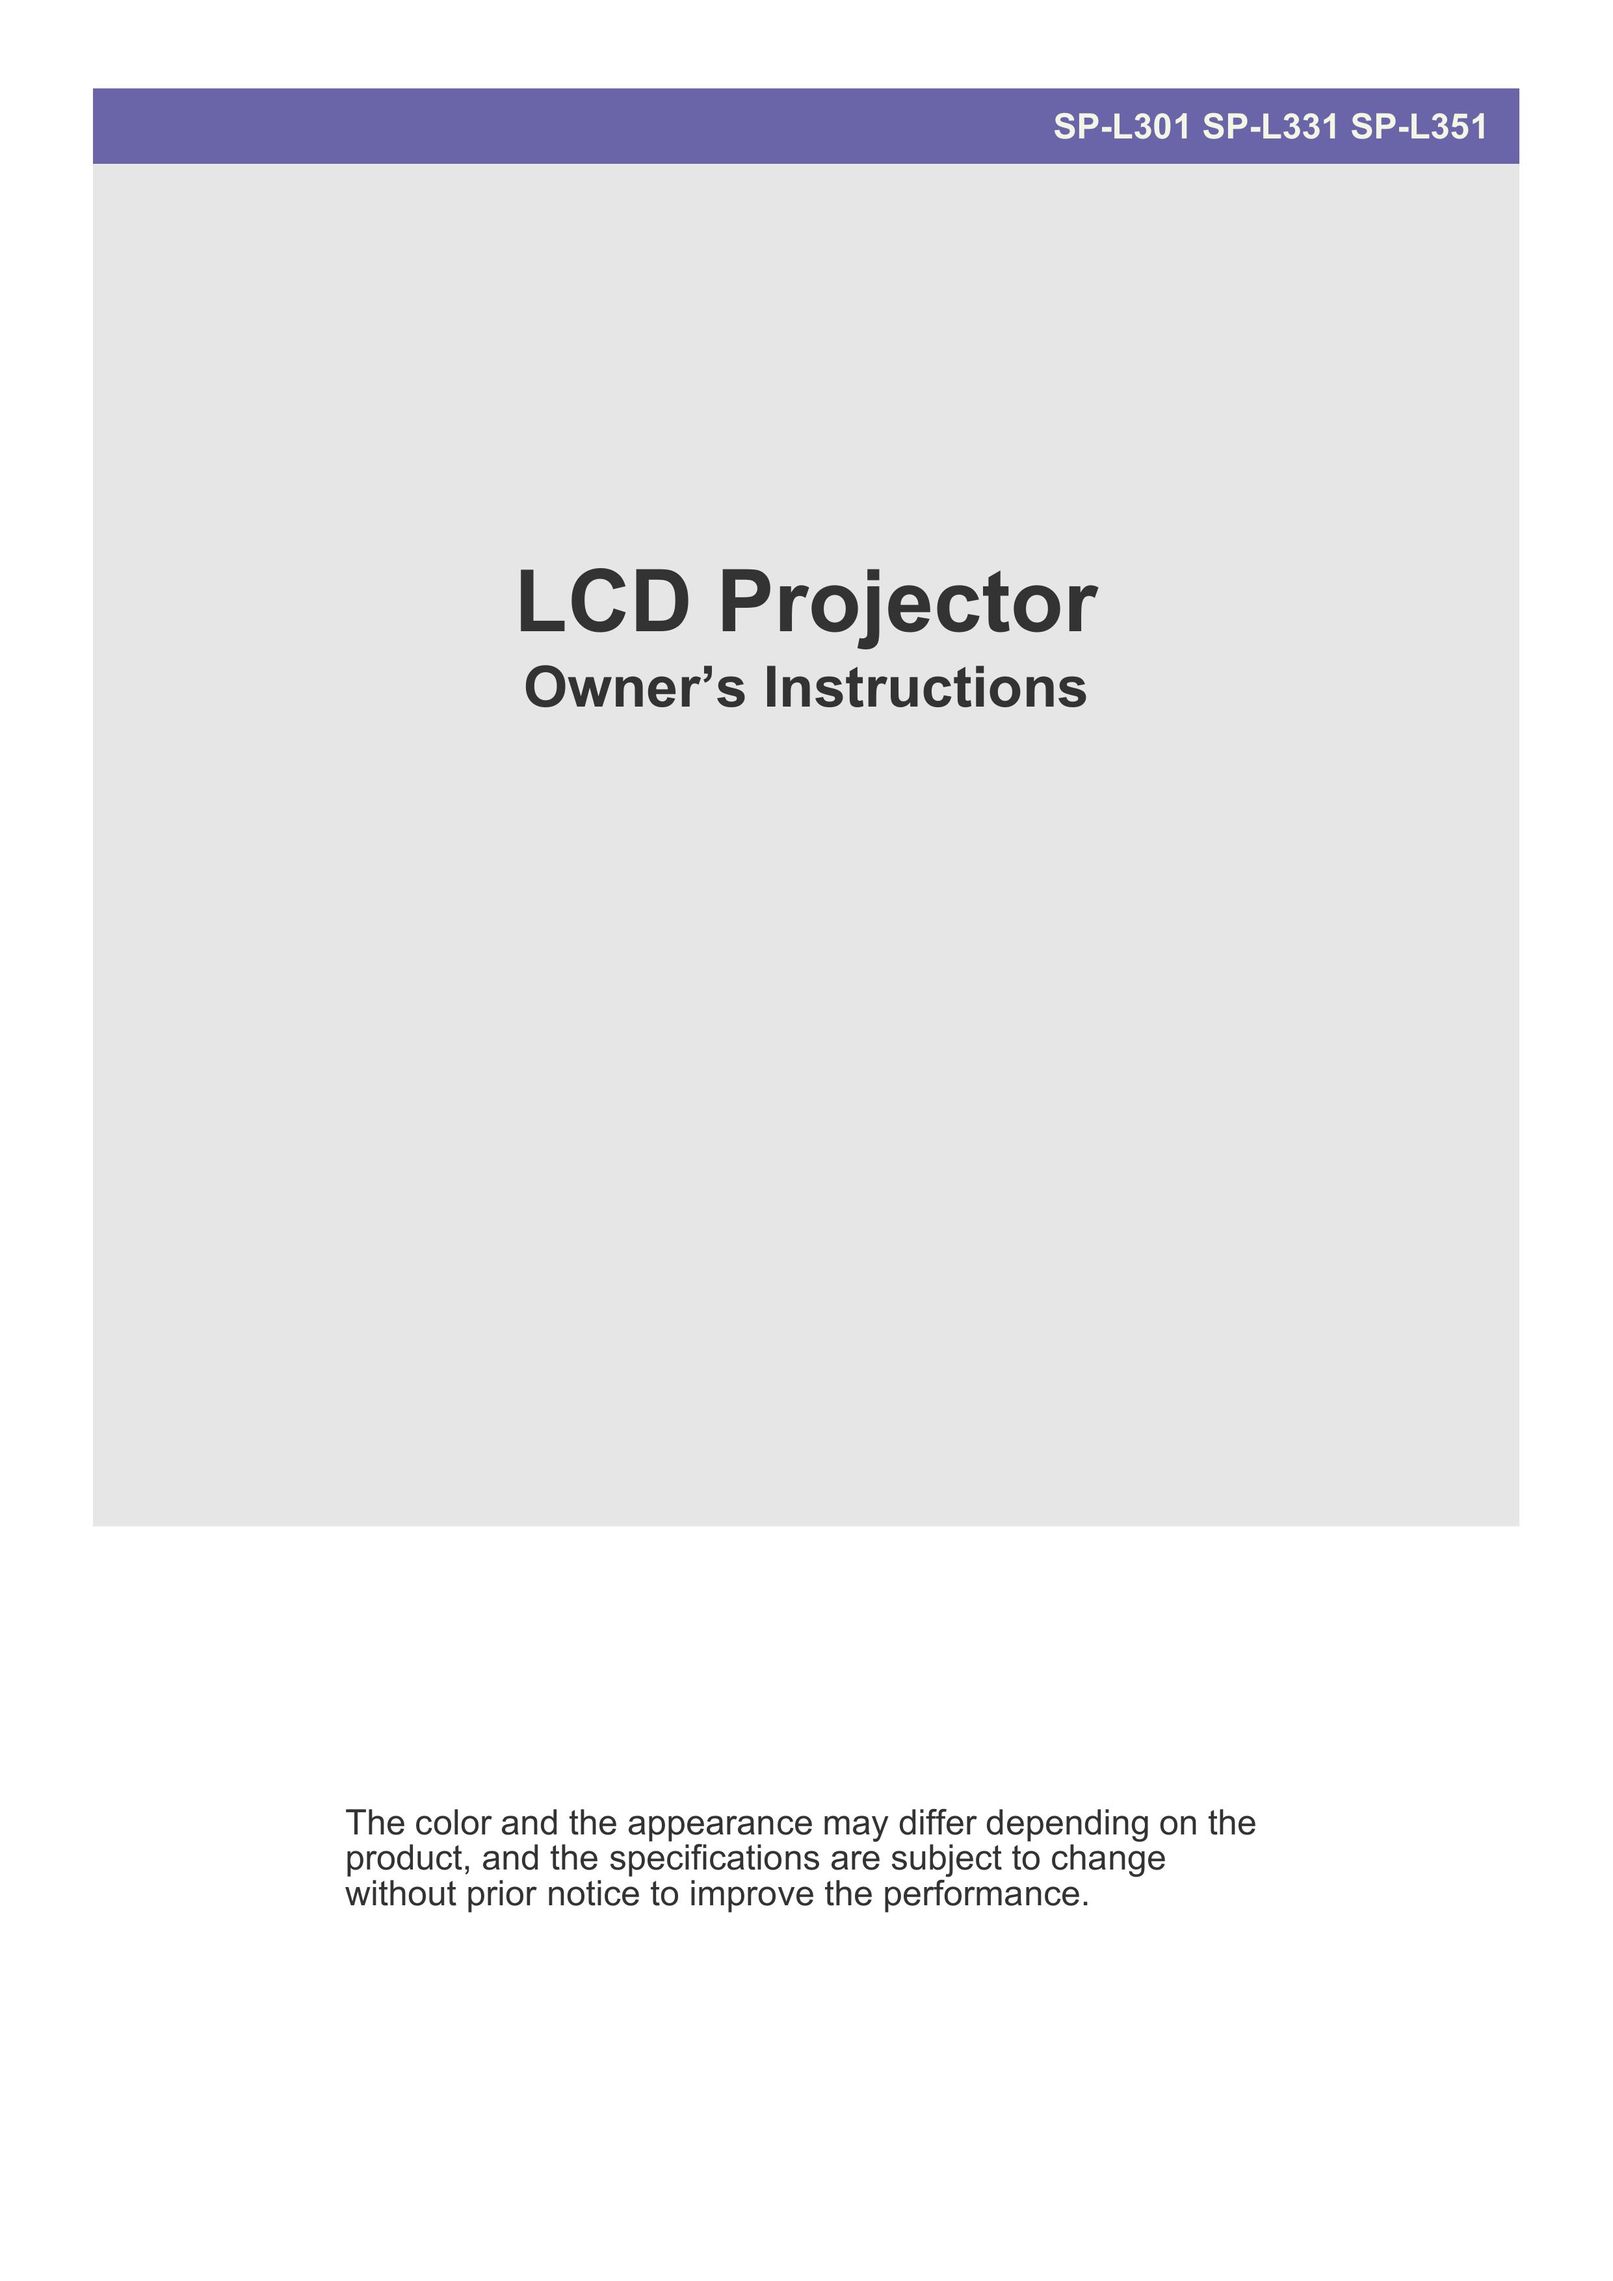 Samsung BP59-00134H-01 Projector User Manual